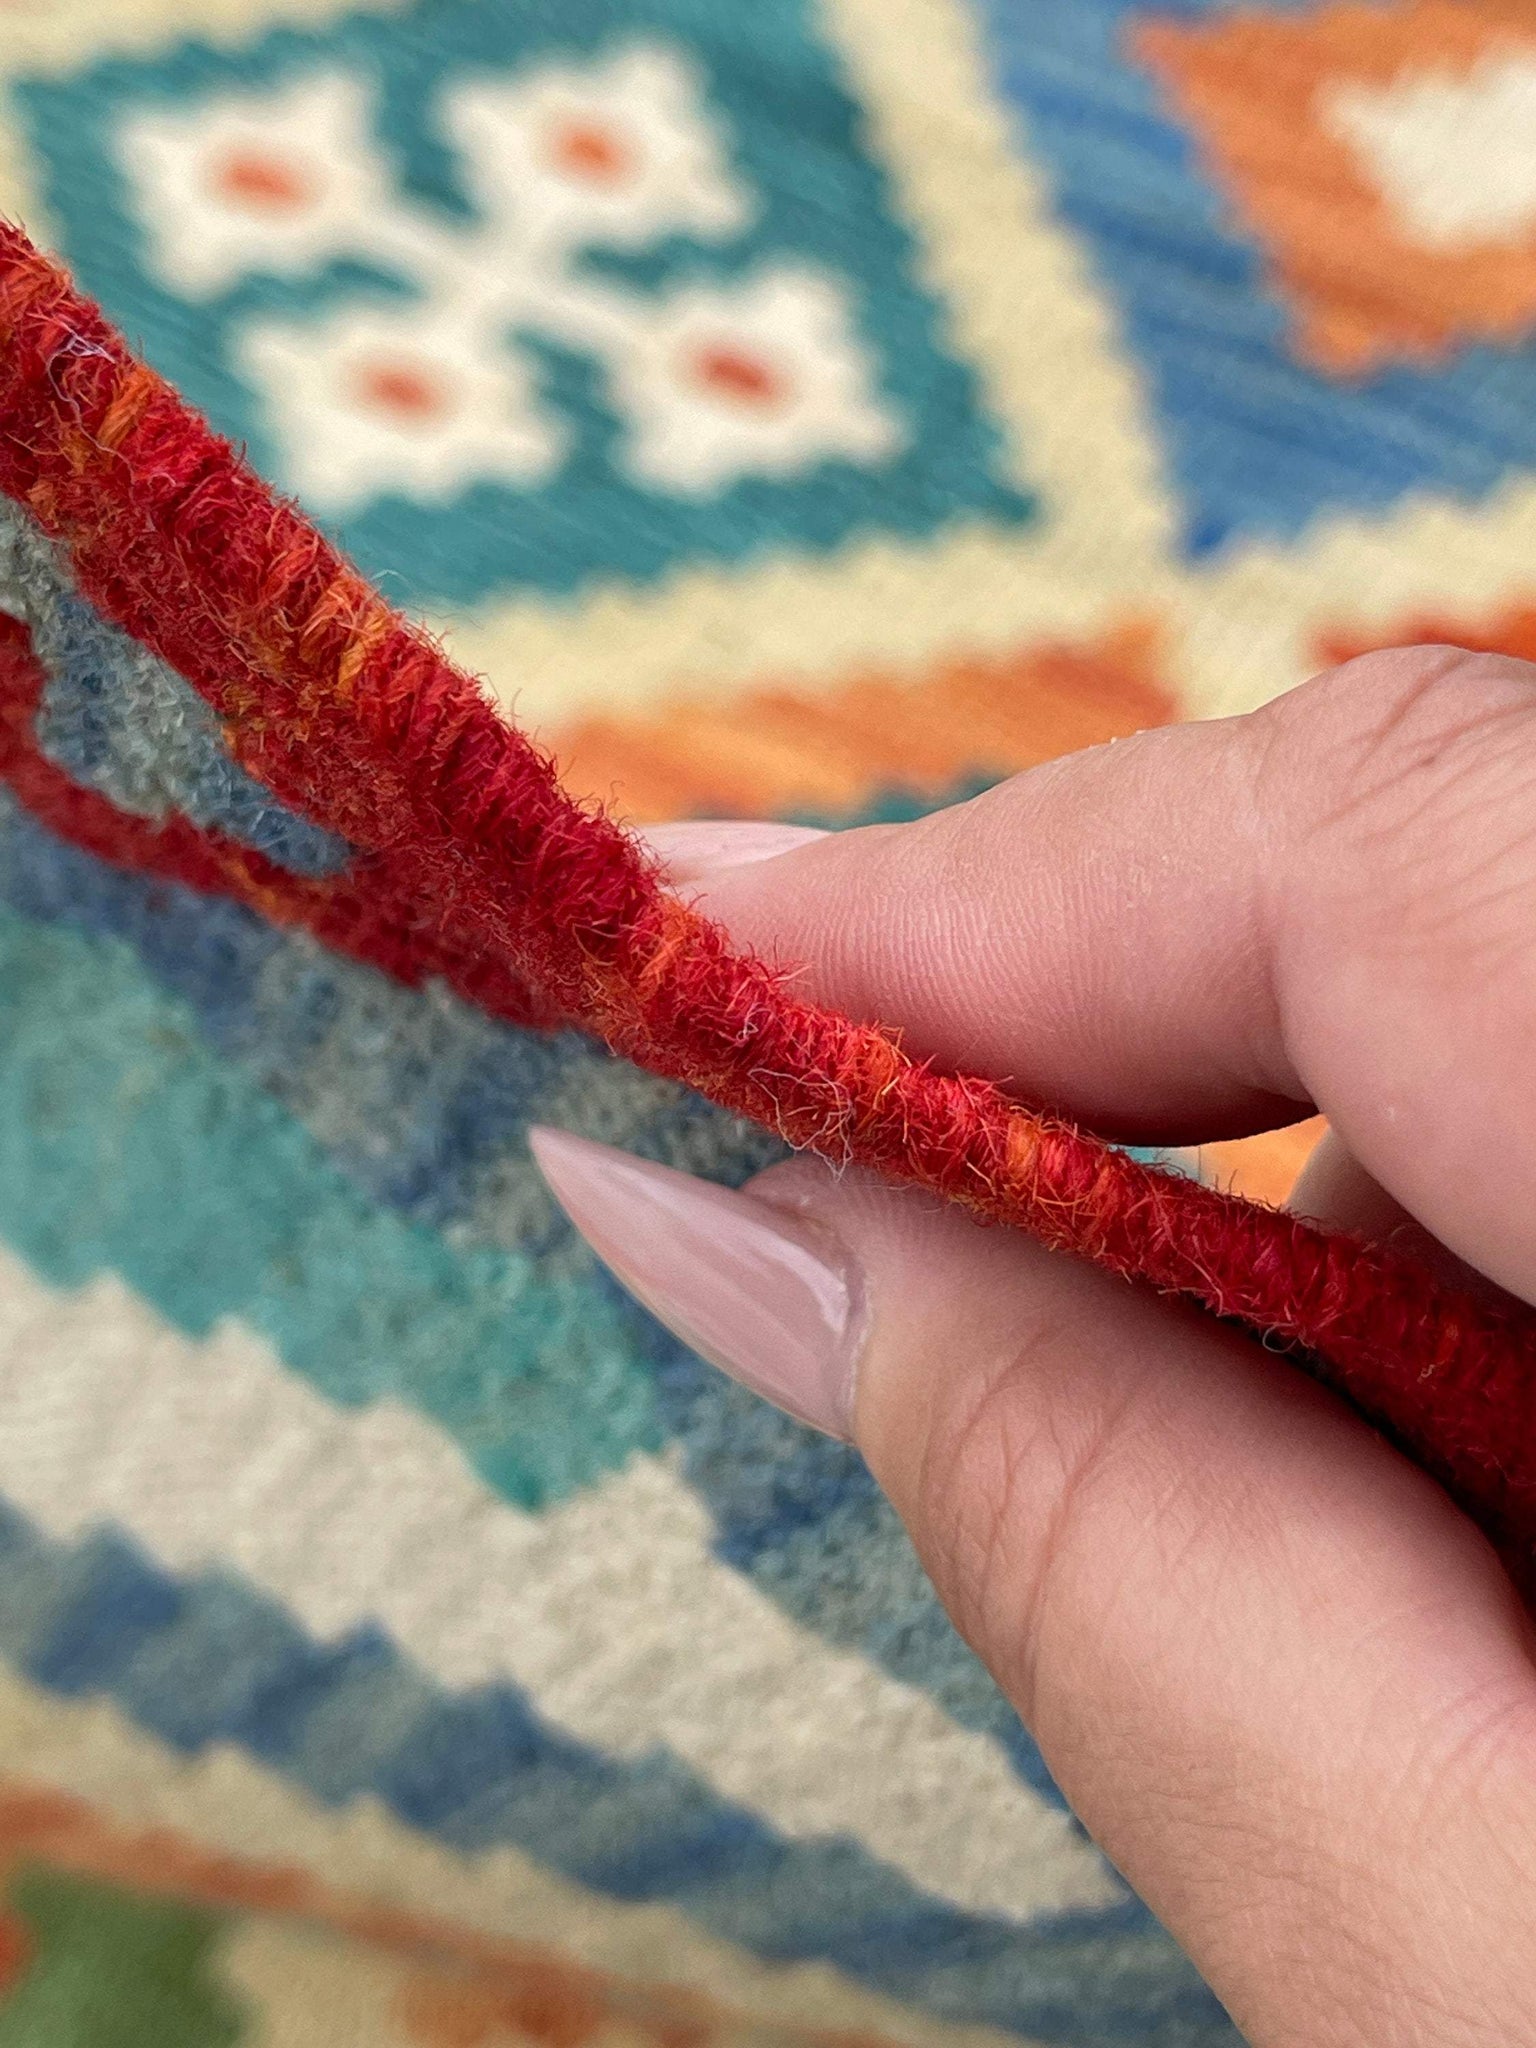 7x10 (215x305) Handmade Afghan Kilim Flatweave Rug | Orange Green Ivory Blue Colorful | Boho Tribal Moroccan Outdoor Wool Knotted Woven